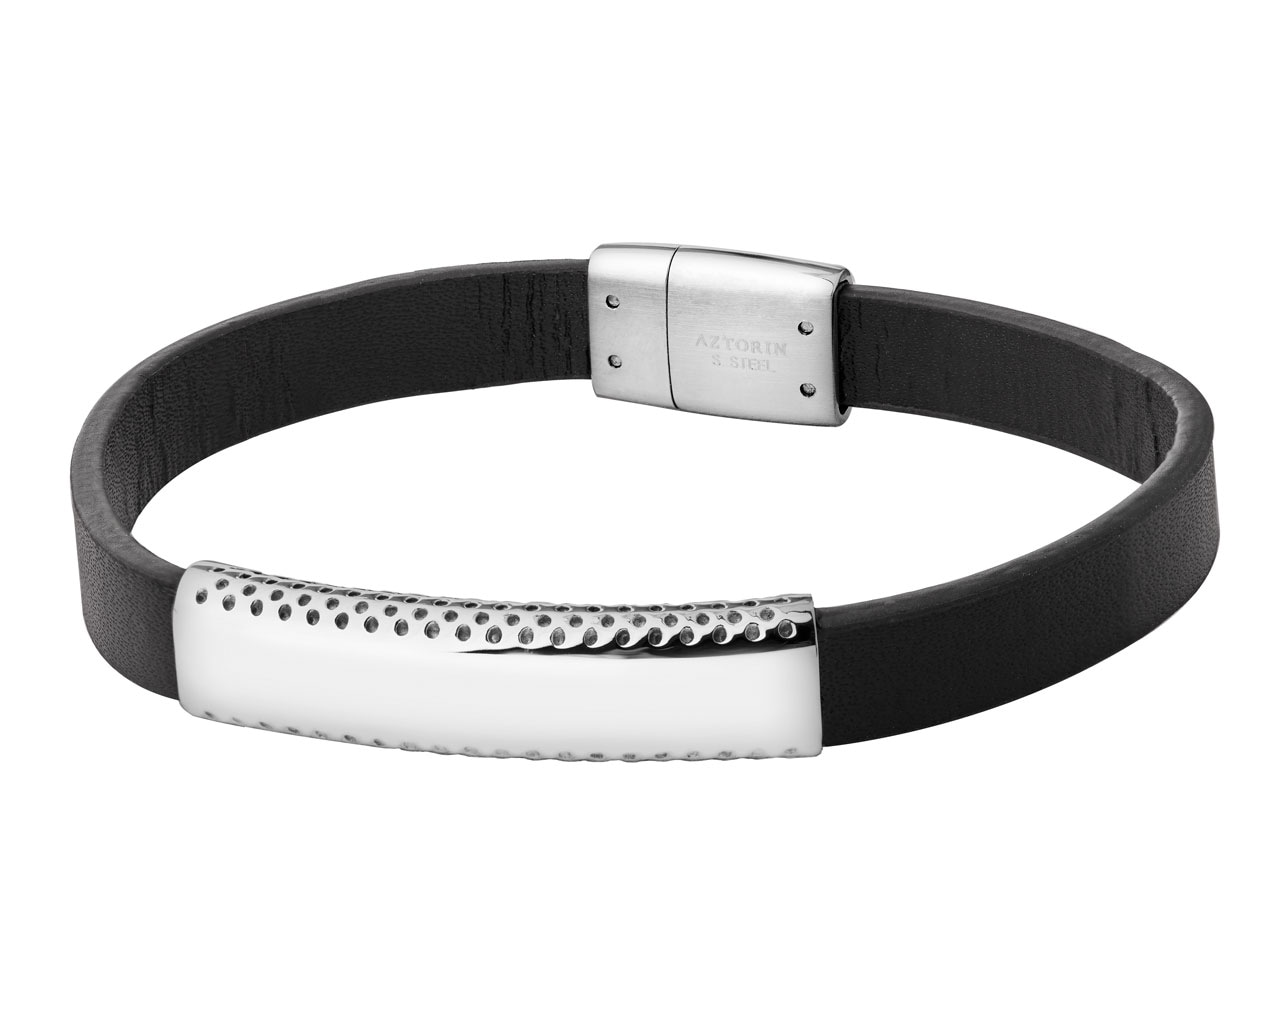 Stainless Steel, Leather Bracelet 